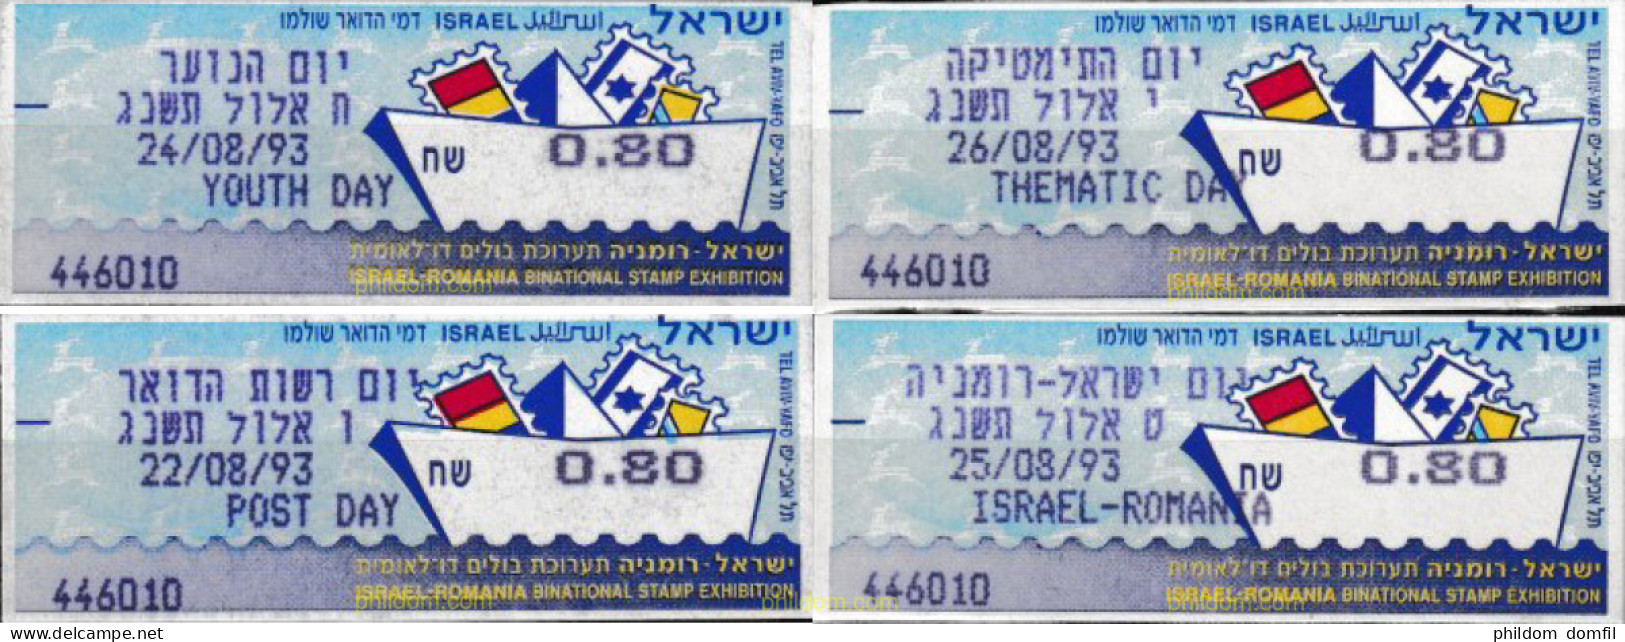 662194 MNH ISRAEL 1993 TELEFILIA 93 - Ungebraucht (ohne Tabs)